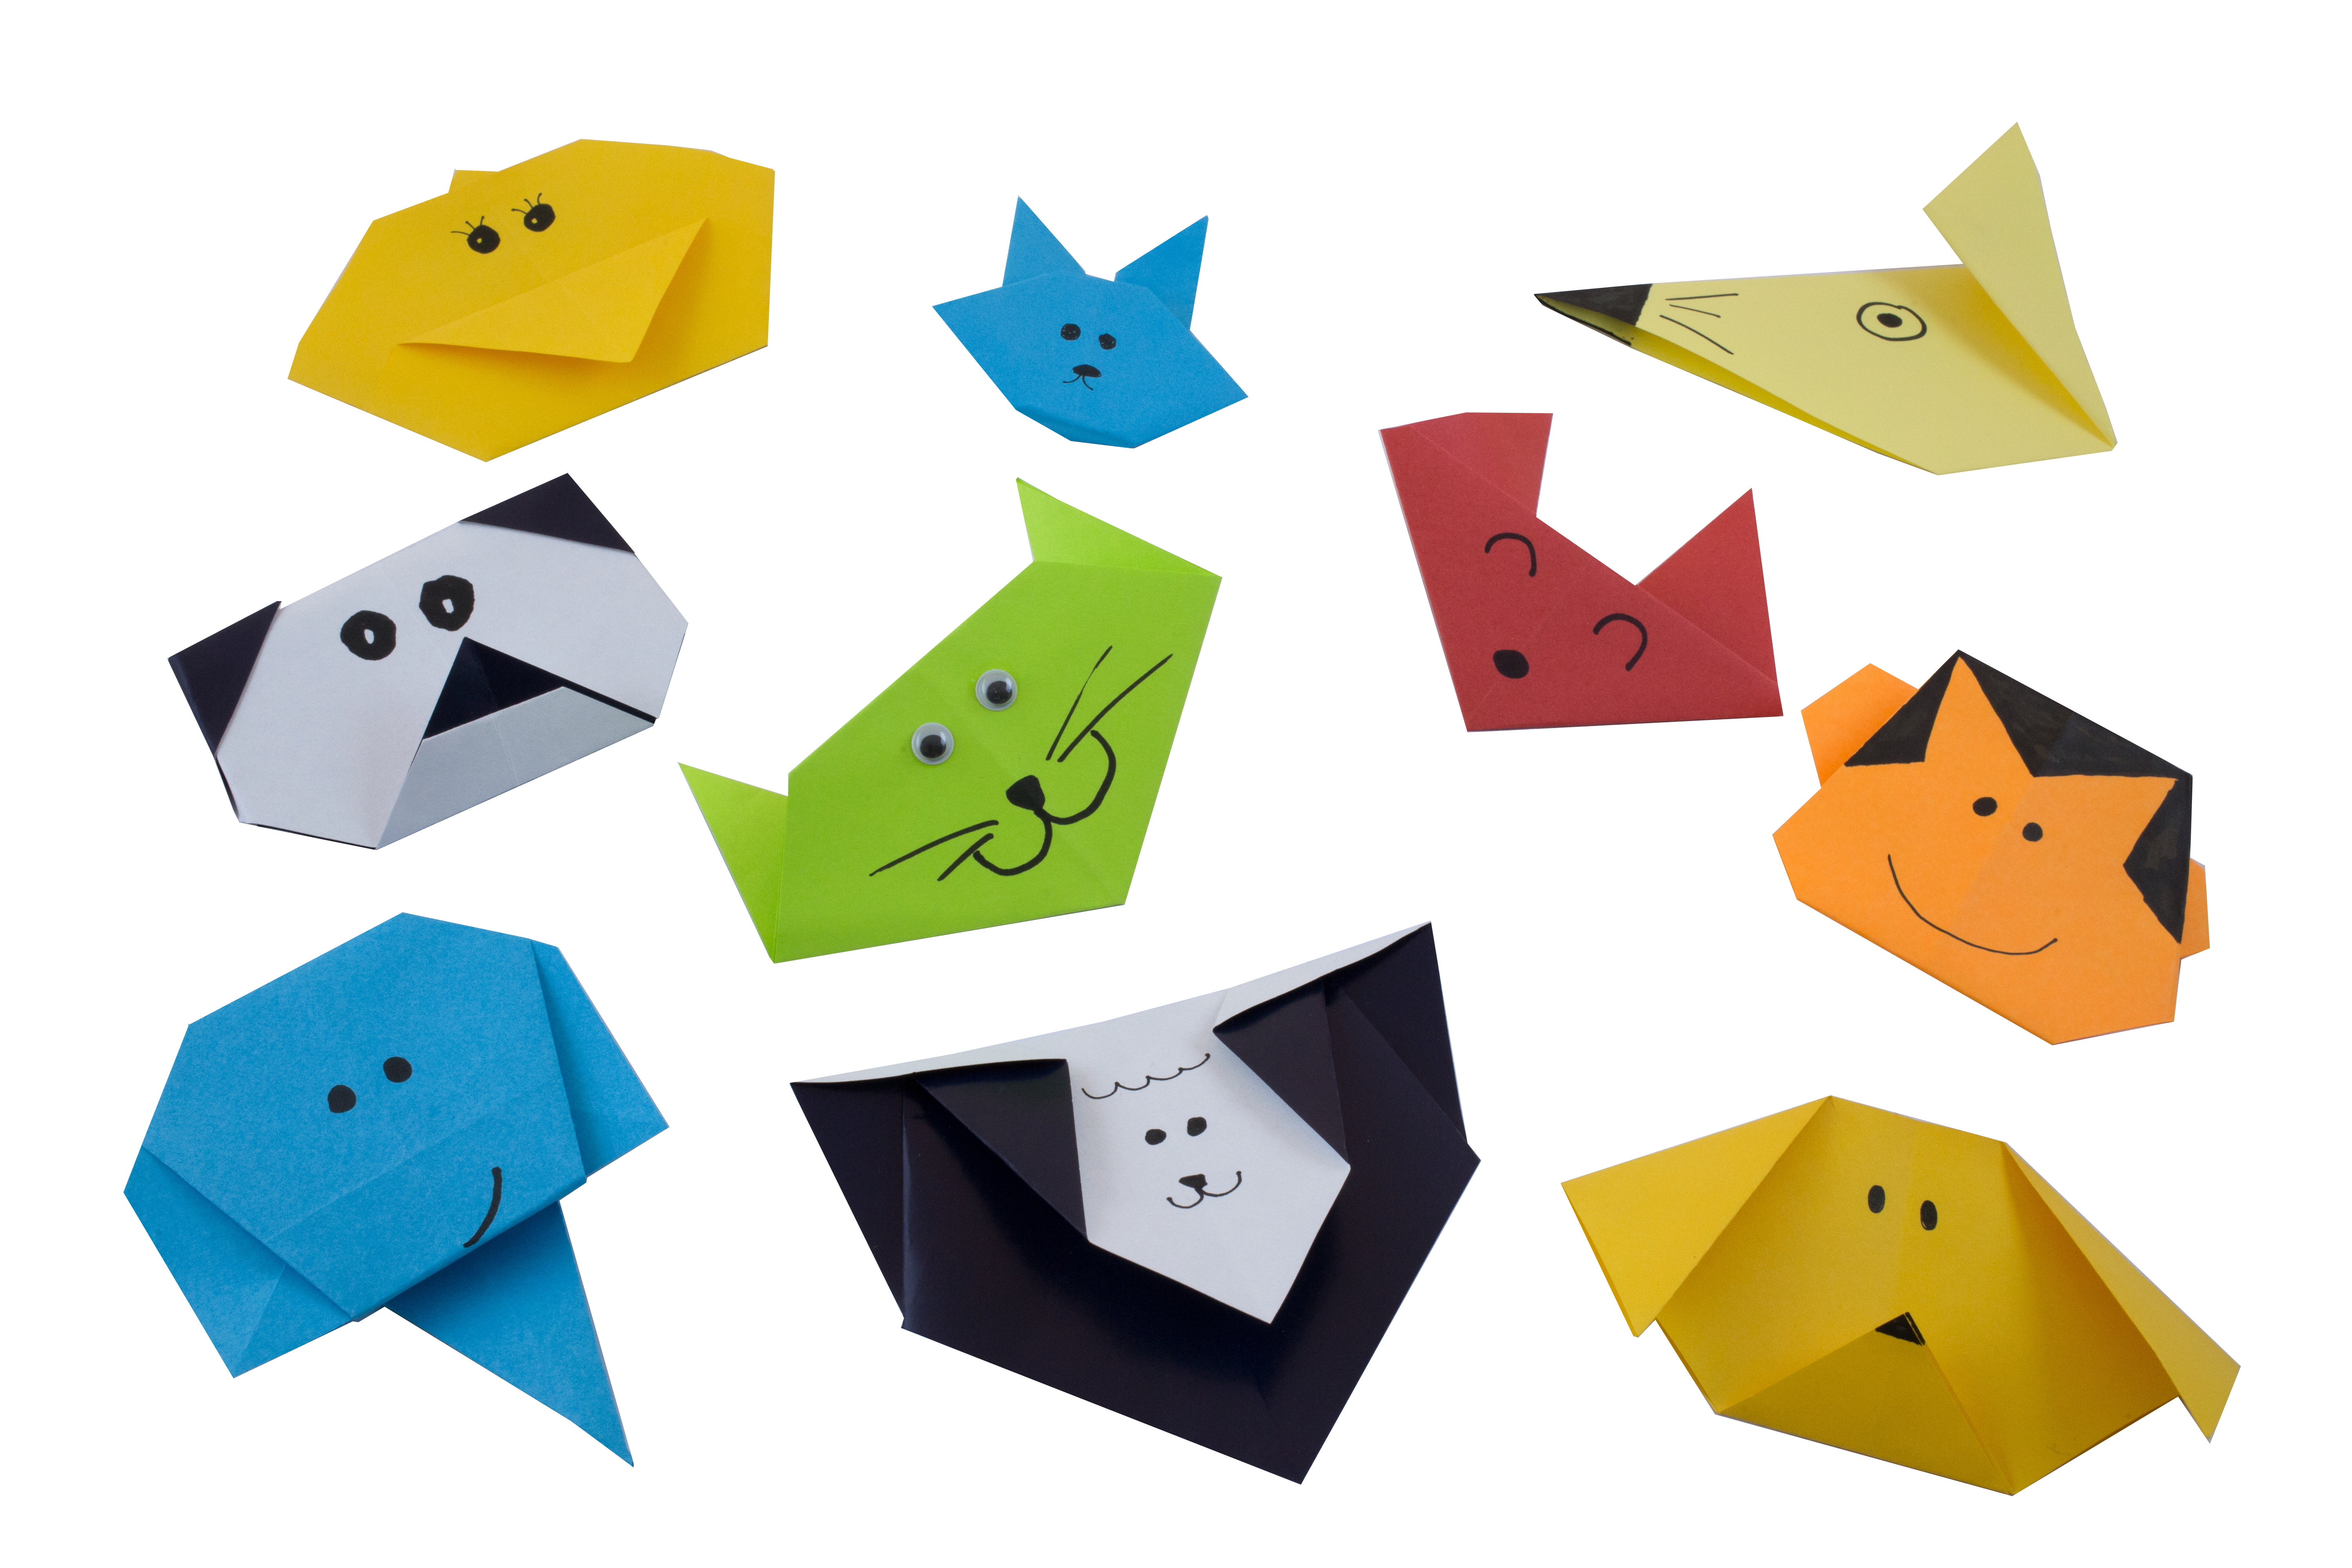 WARAGAMI Origami Animal Faces Theme Kit   صندوق ورقامي لفن الأوريجامي- وجوه الحيوانات